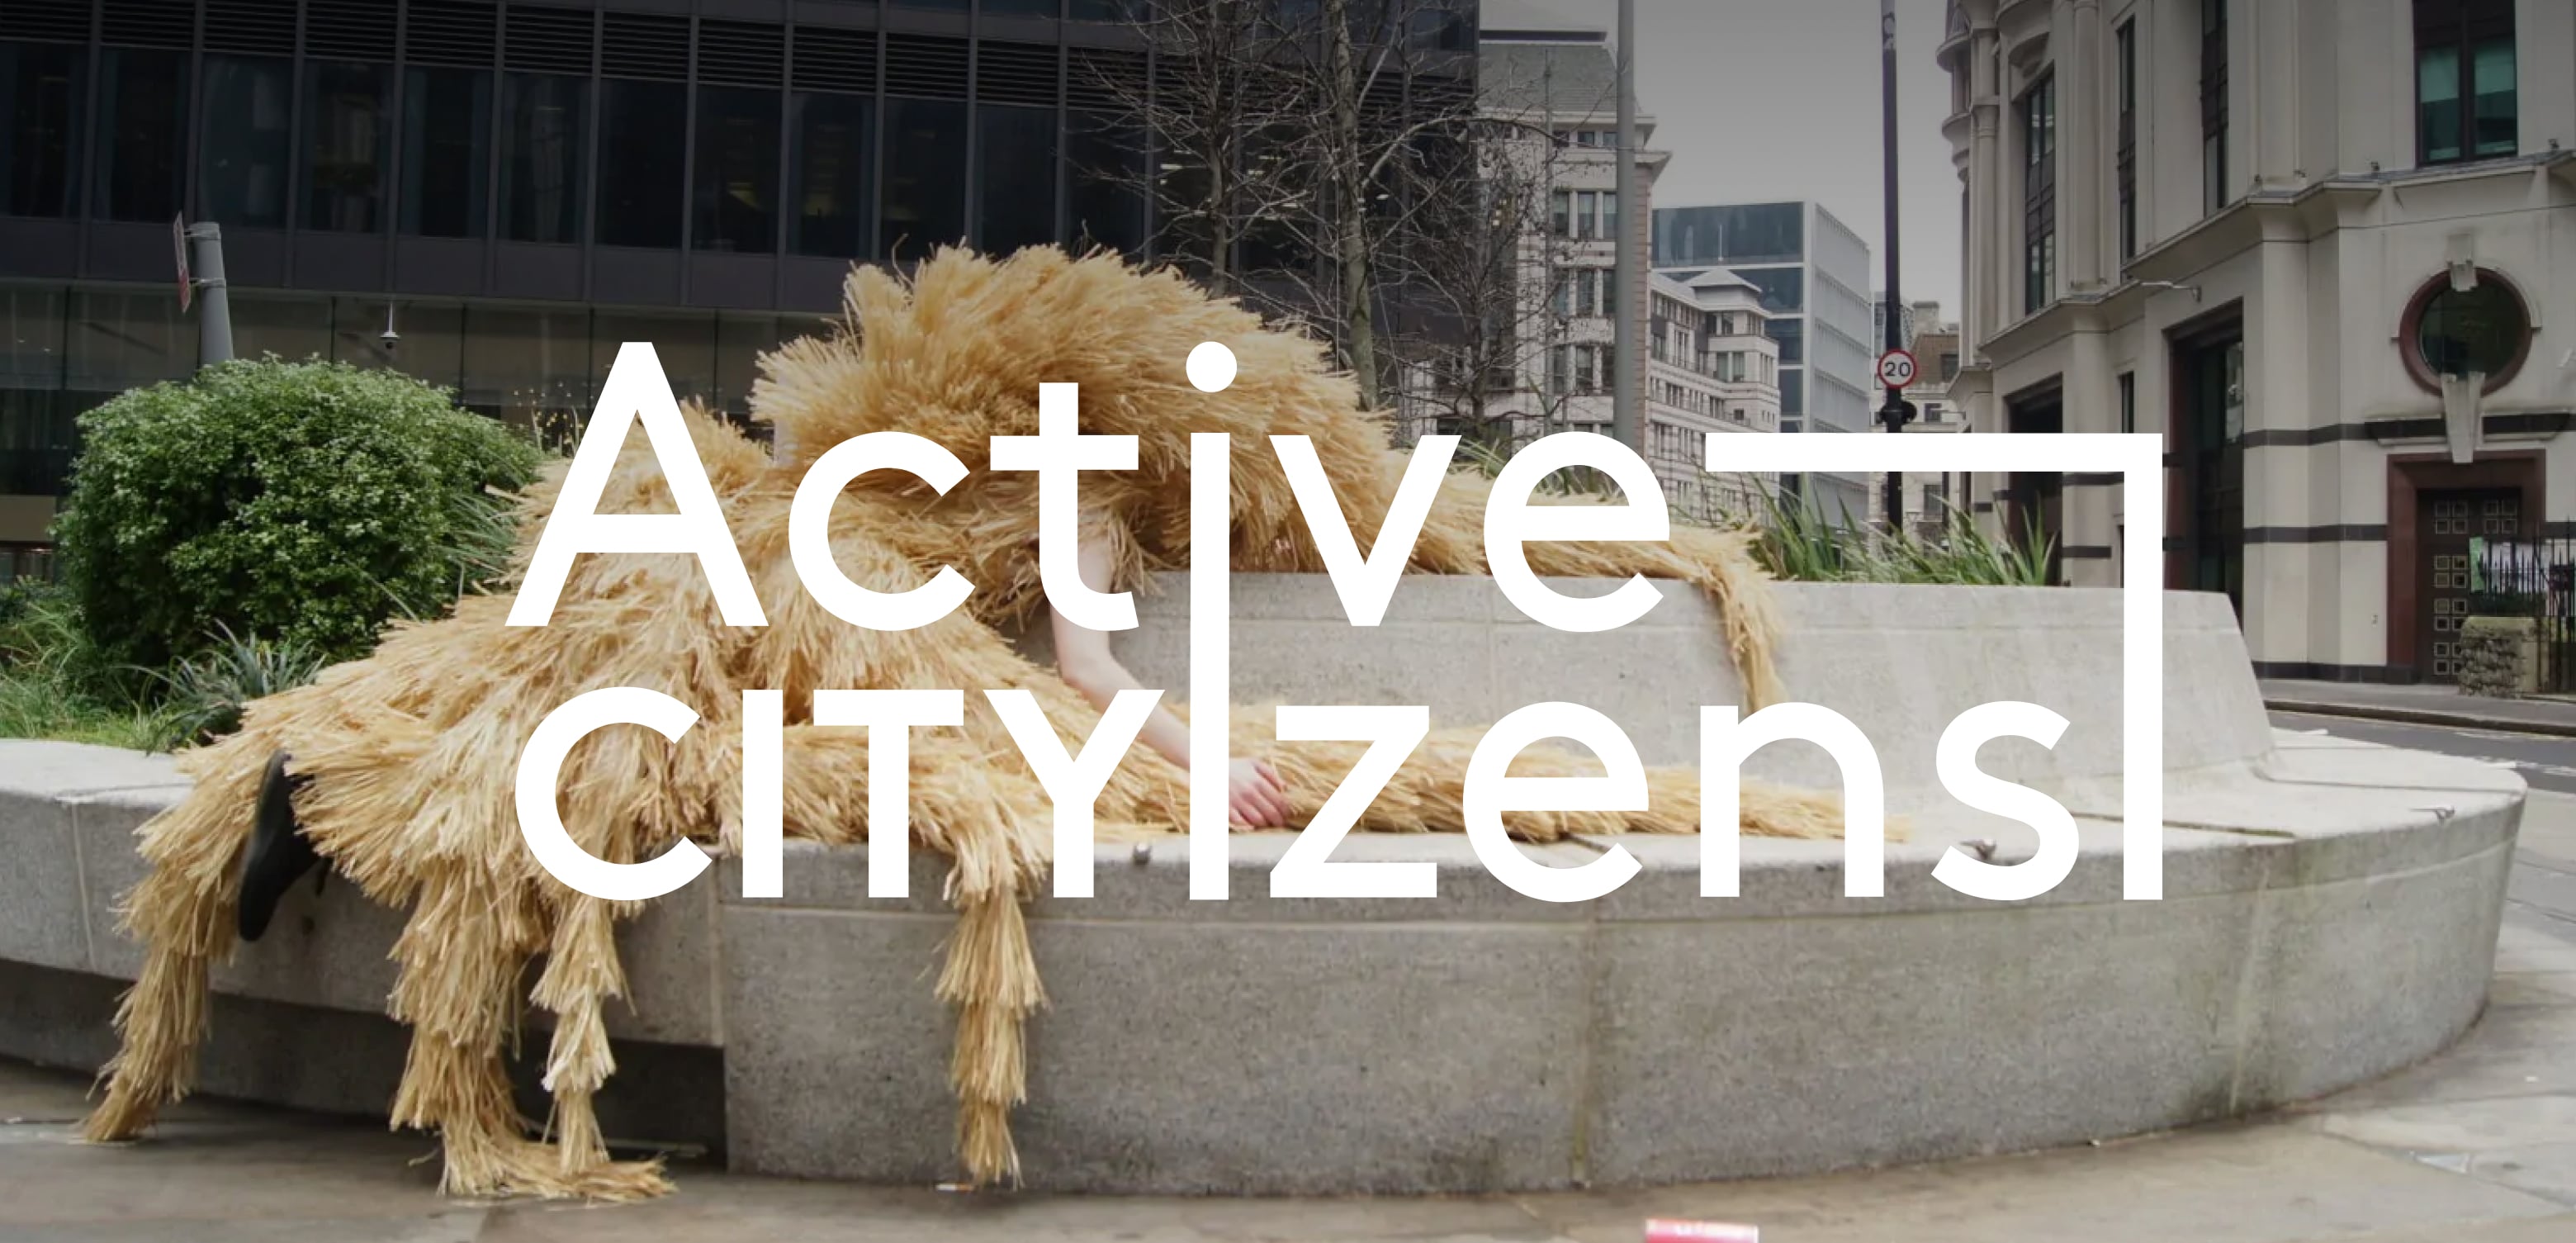 The implementation of the <em>Active City(ZENS)</em> project has begun